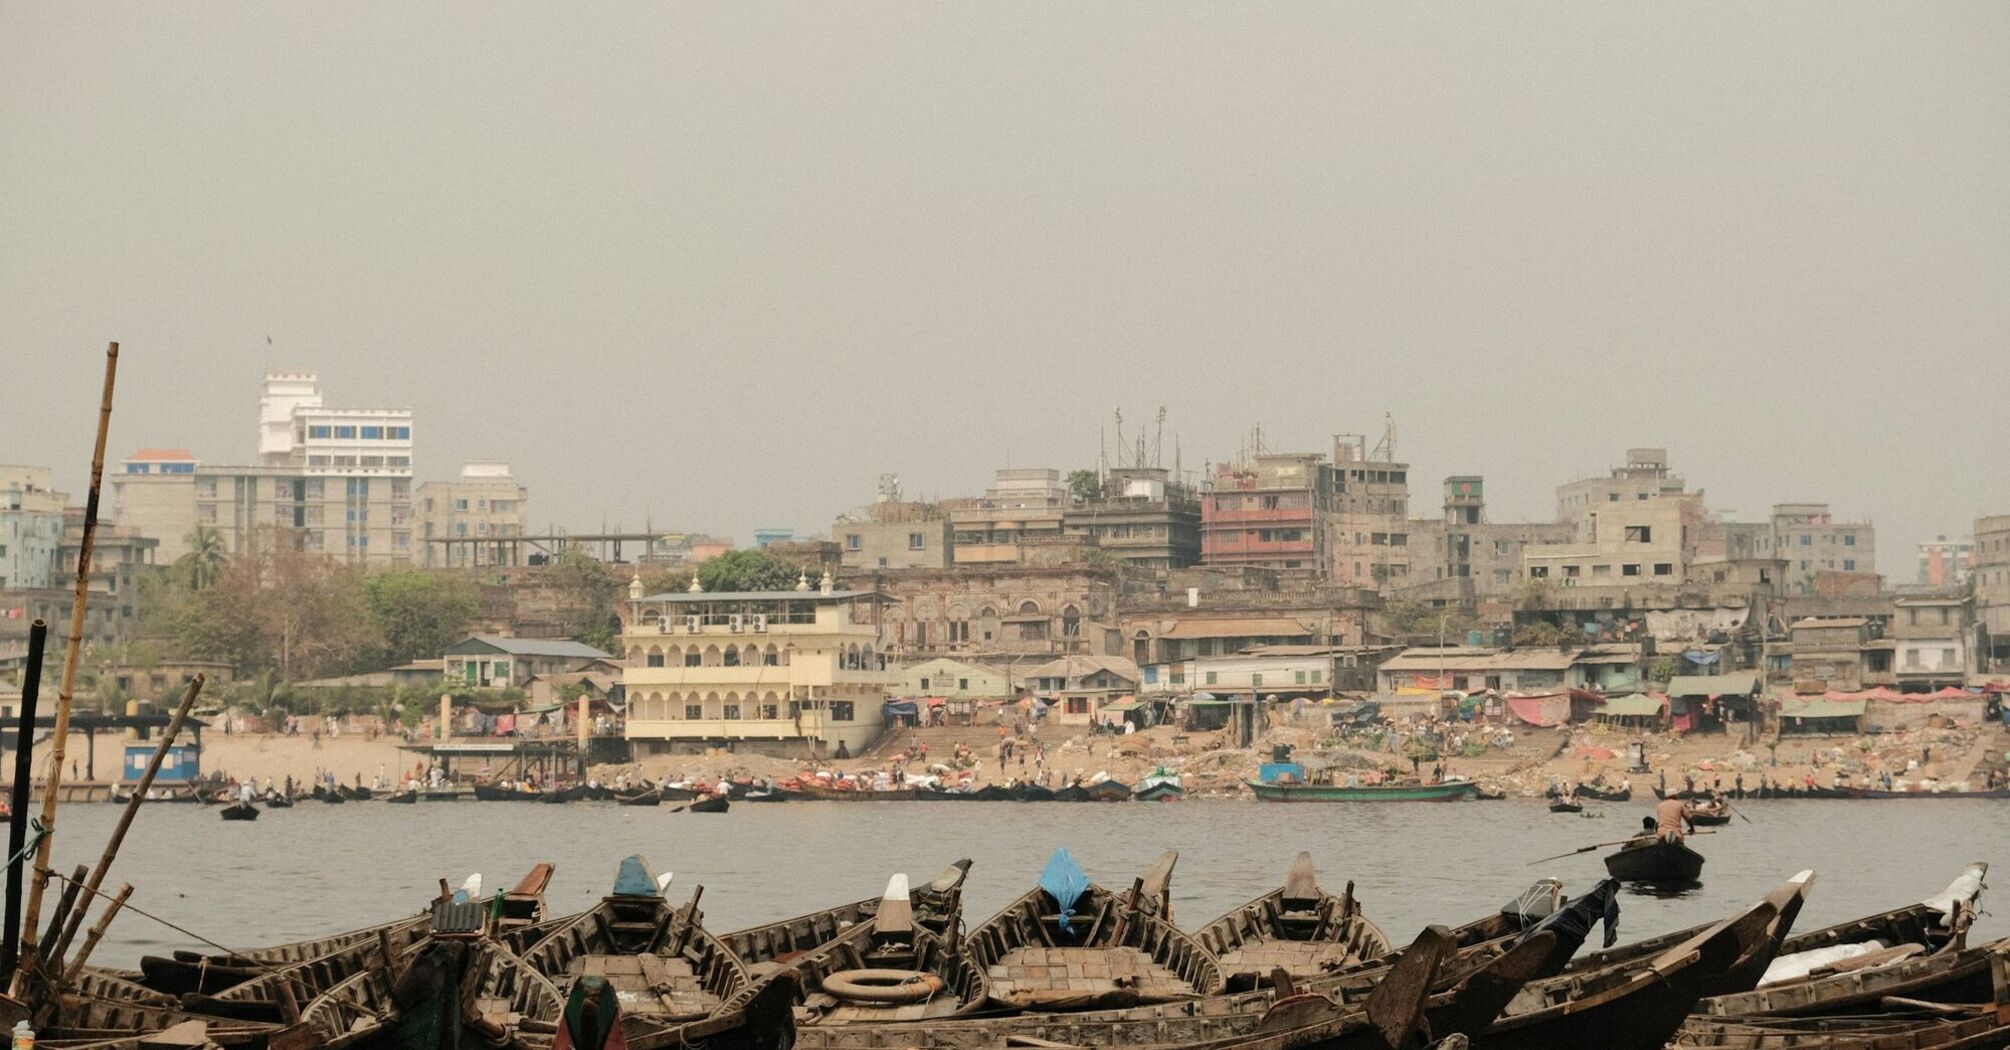 Boats docked near a crowded urban area in Bangladesh